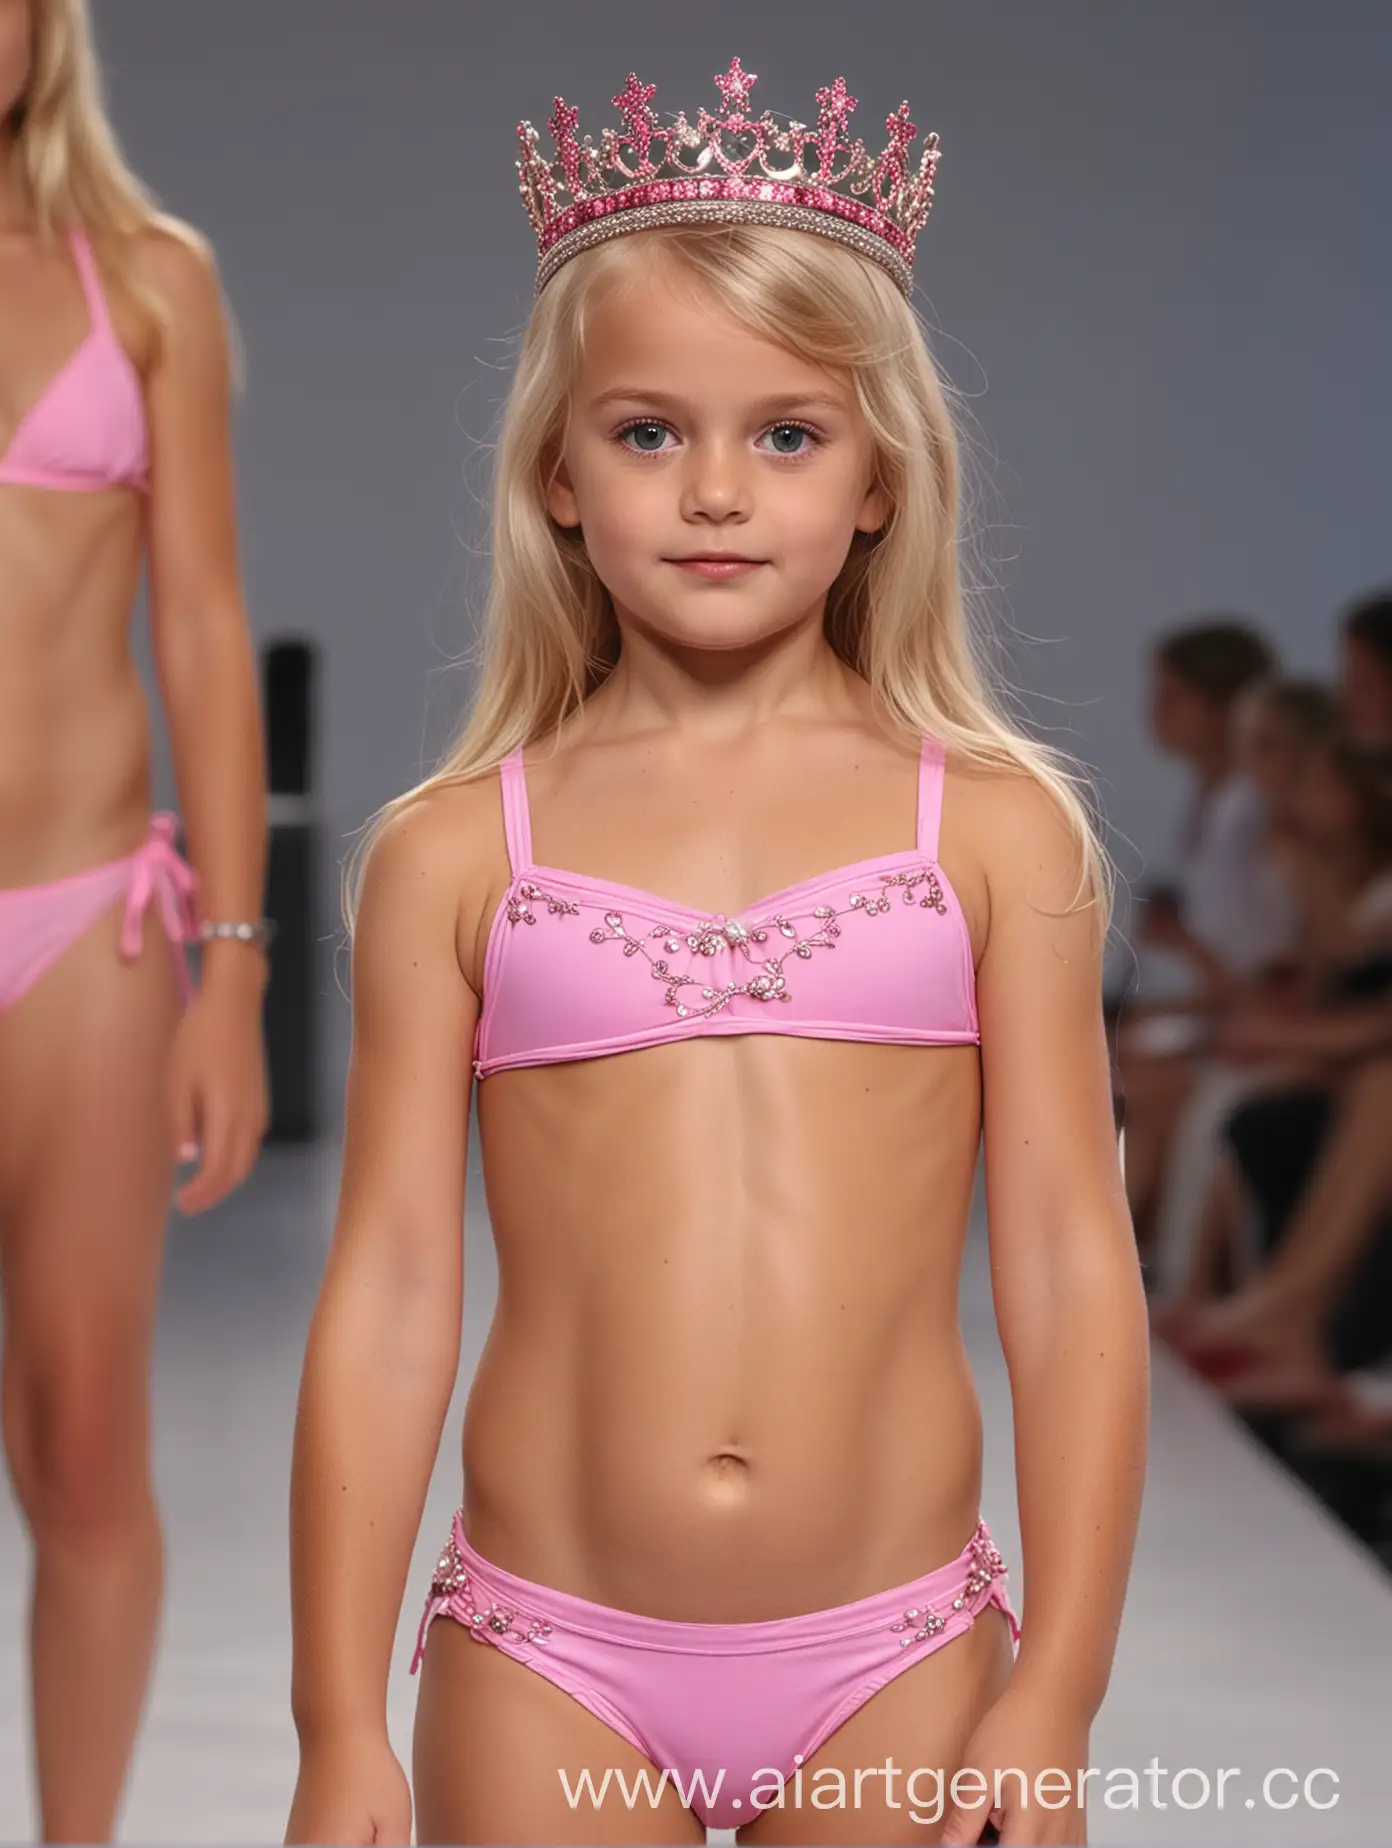 Young-German-Girl-Modeling-Pink-Bikini-with-Crown-on-New-York-Runway